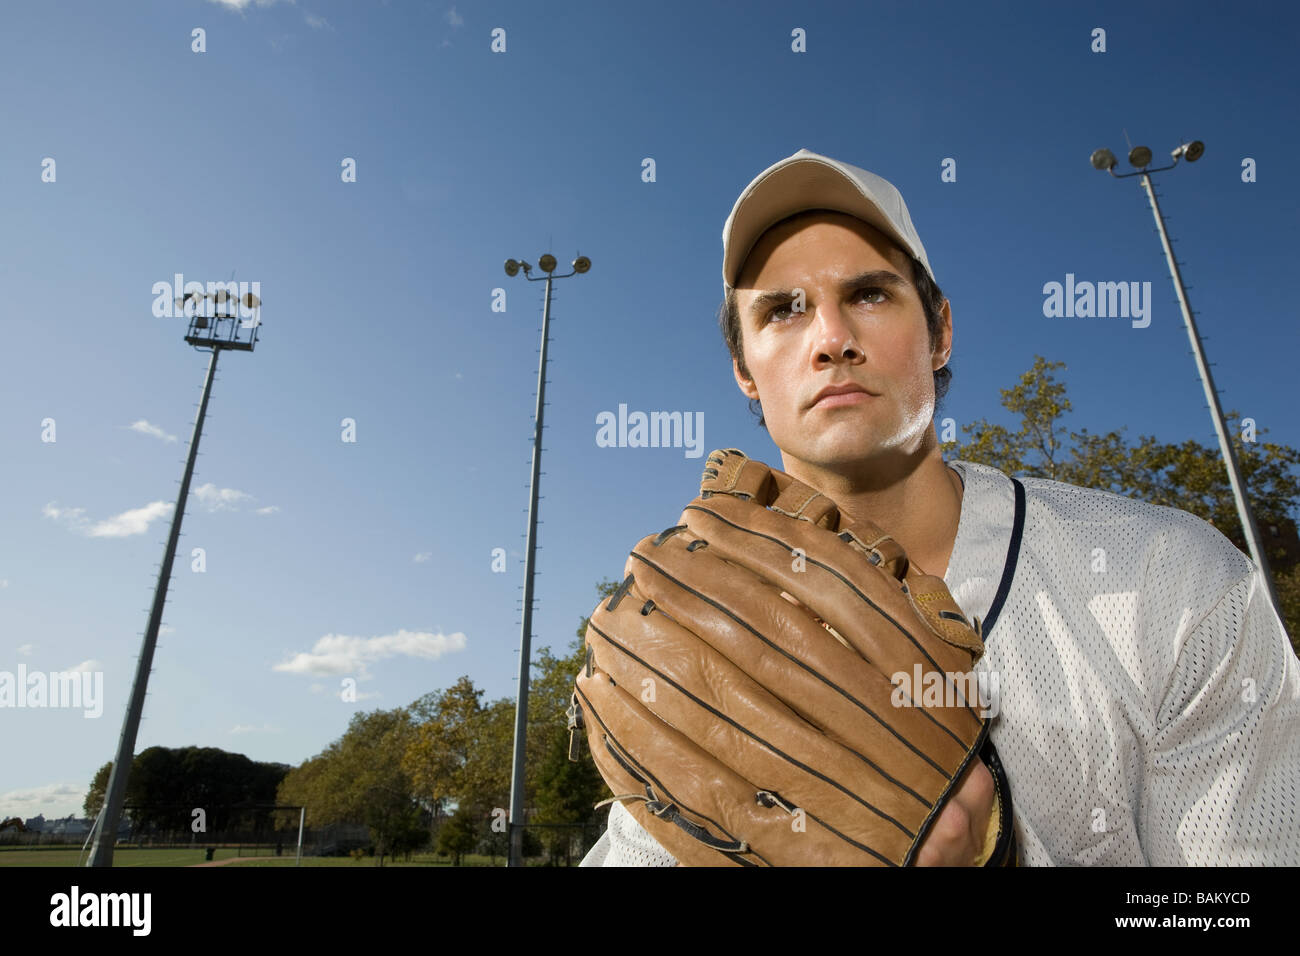 Baseballspieler Stockfoto